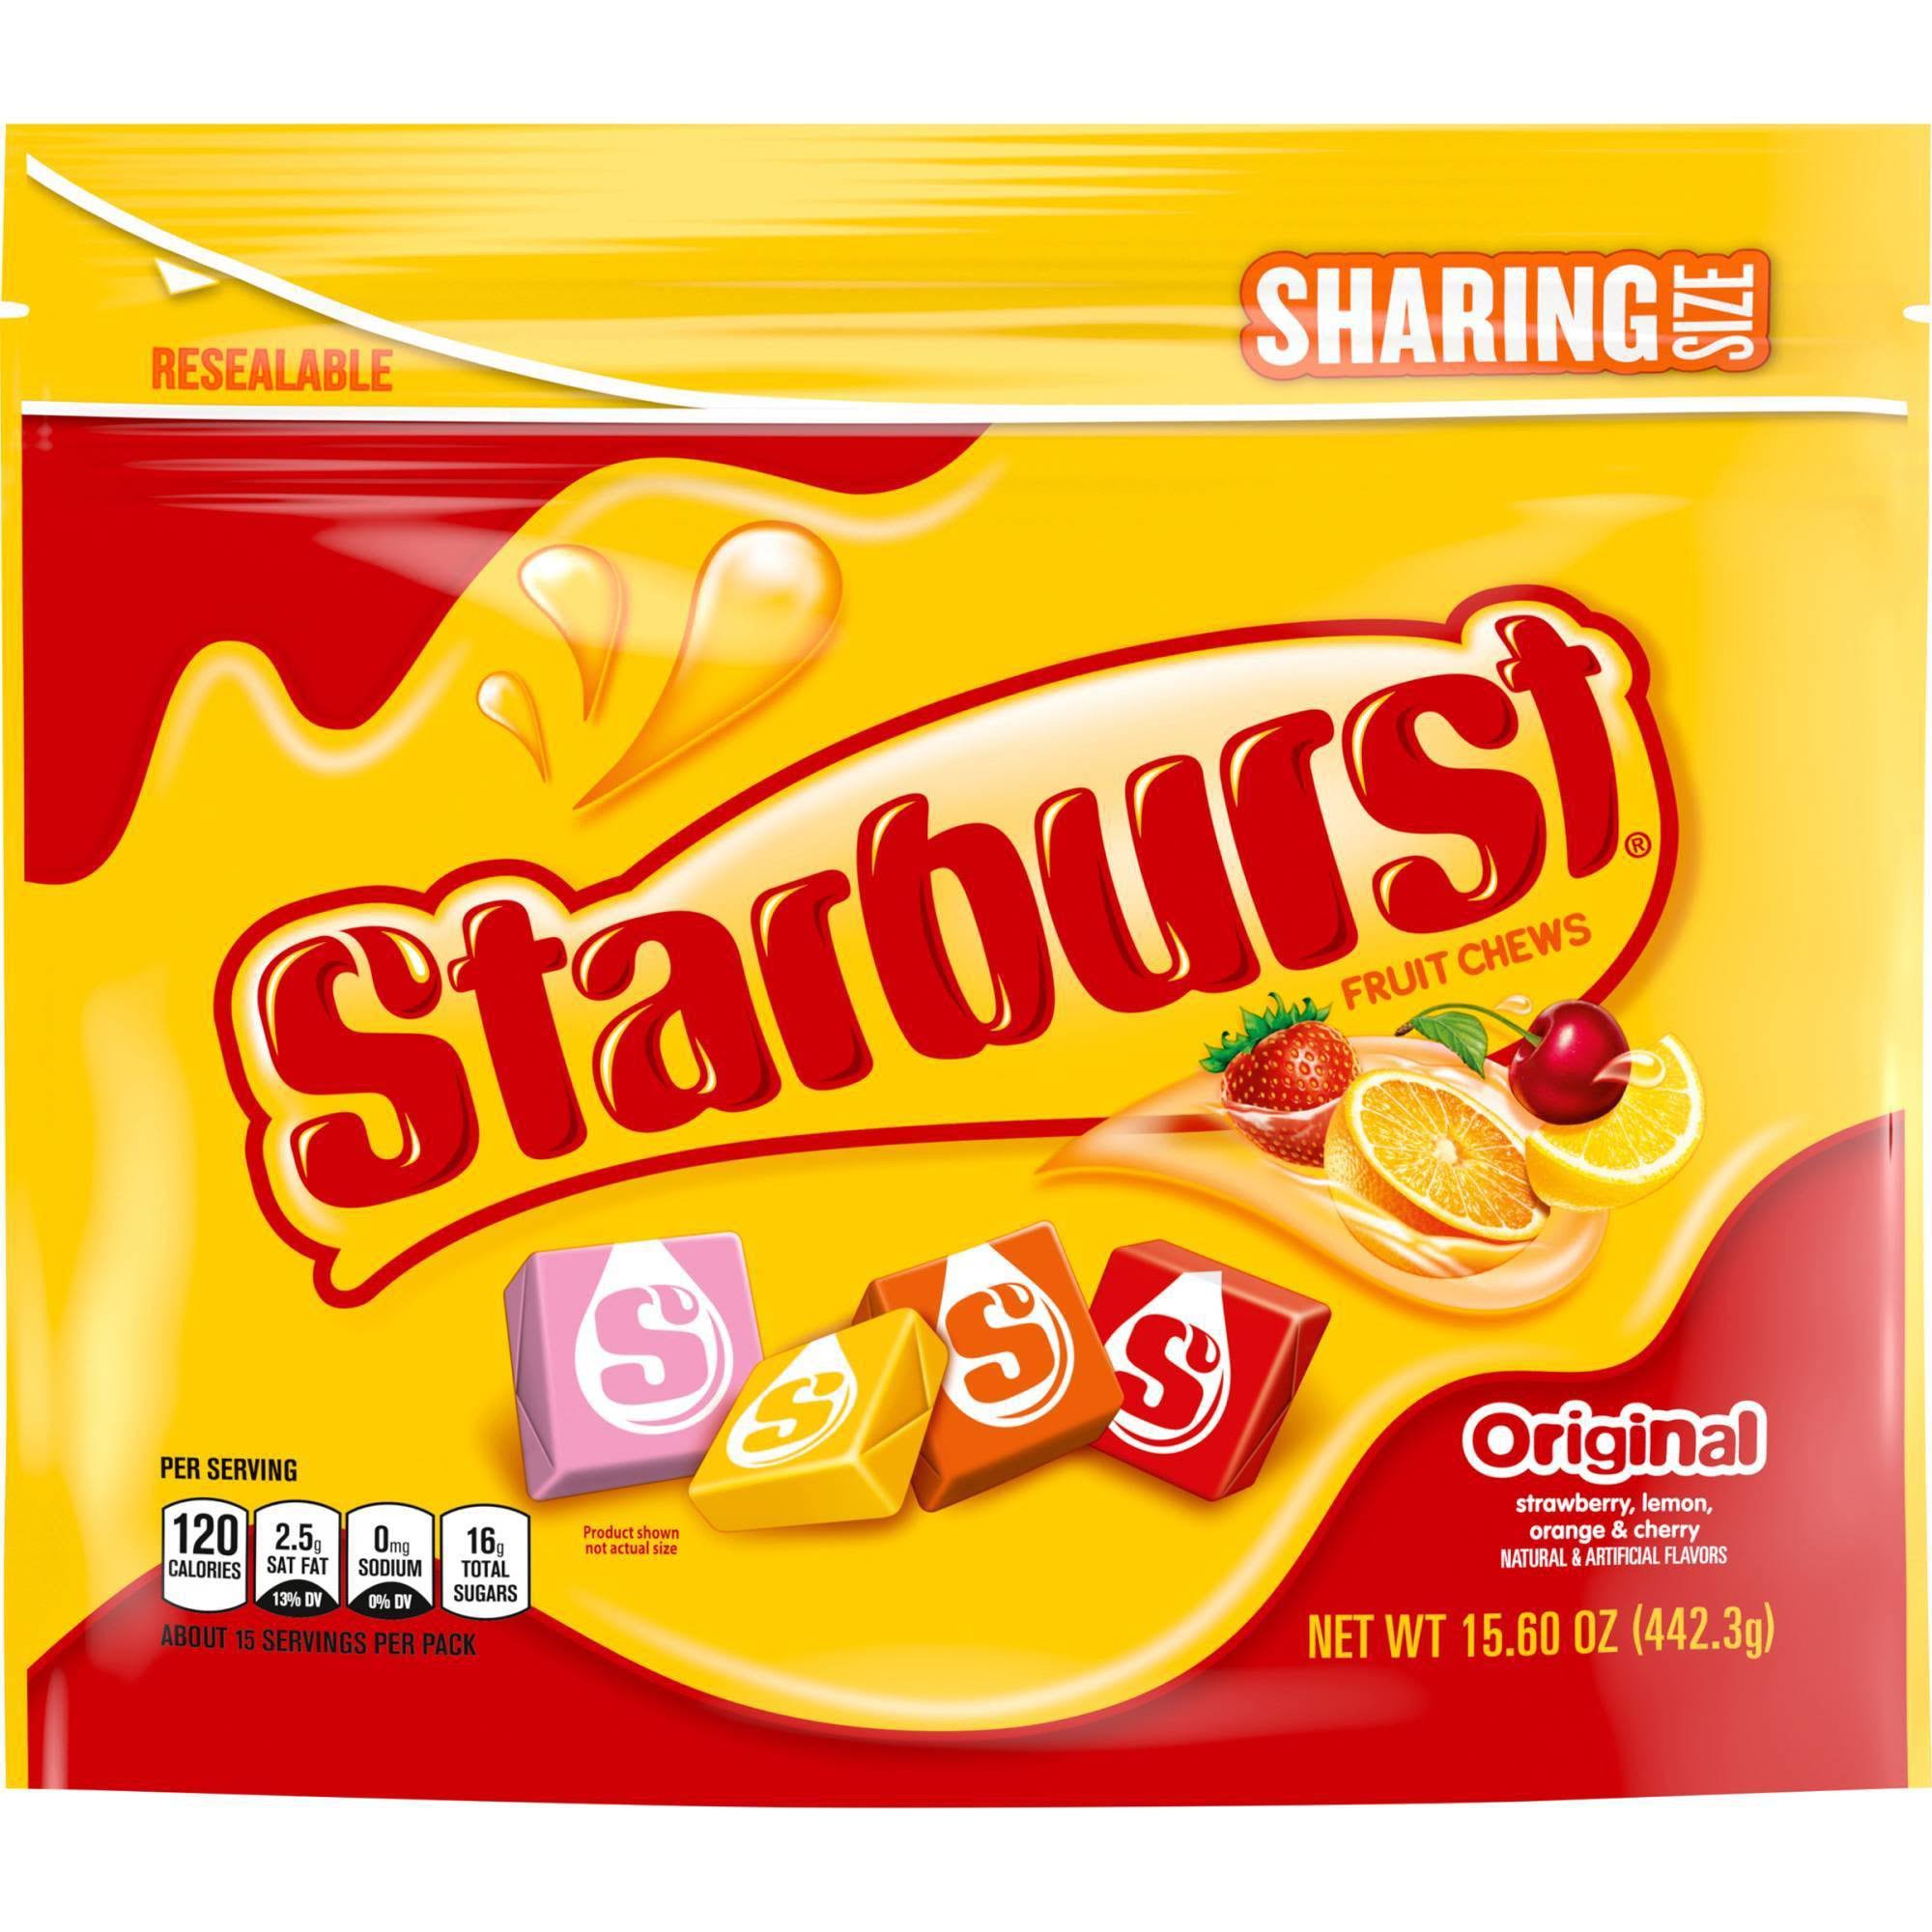 Starburst Fruit Chews, Original, Sharing Size - 15.60 oz